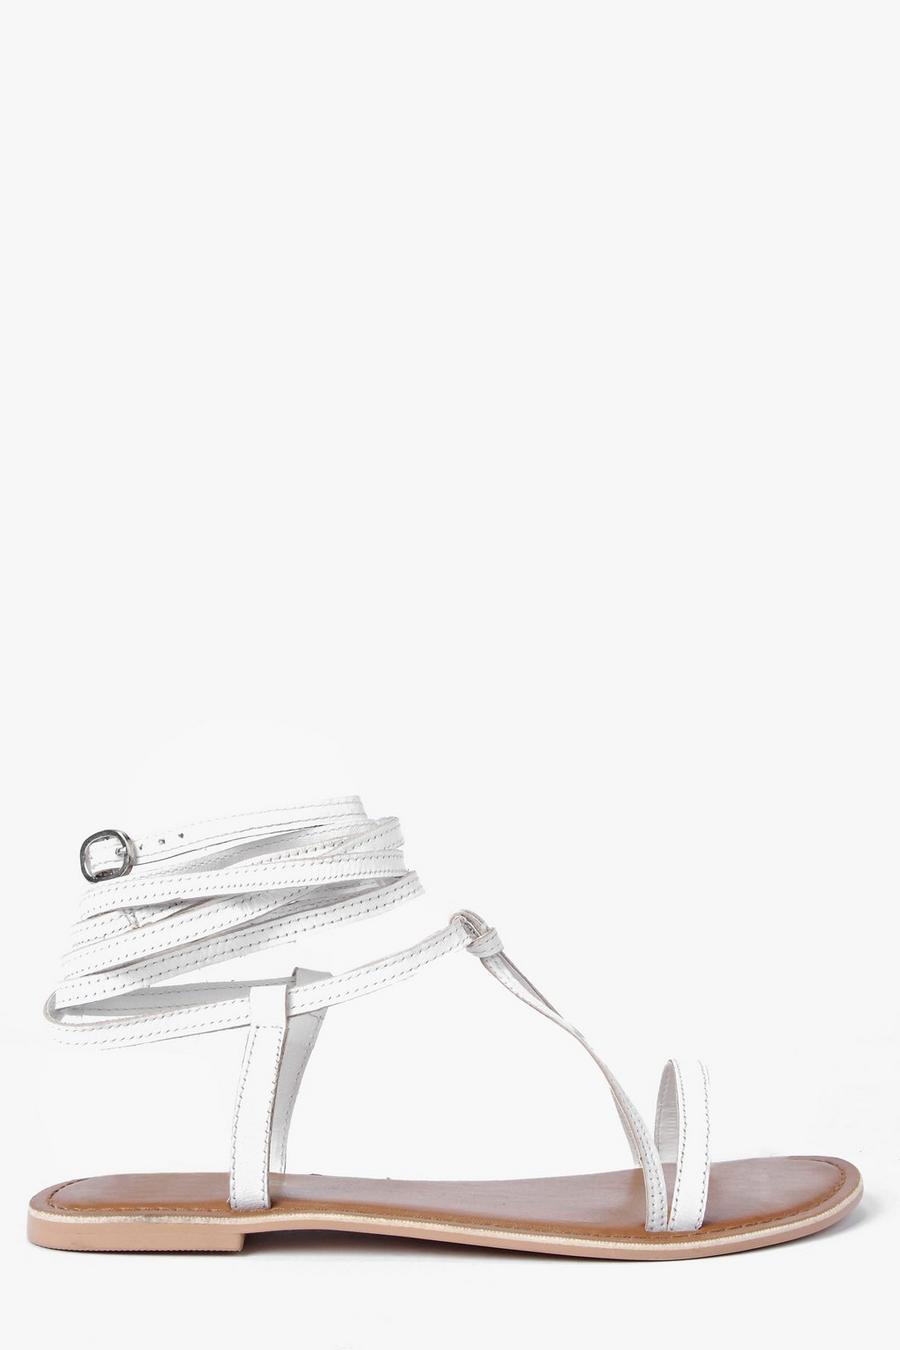 Sandalias ghillies de cuero con tiras cruzadas boutique, Blanco image number 1